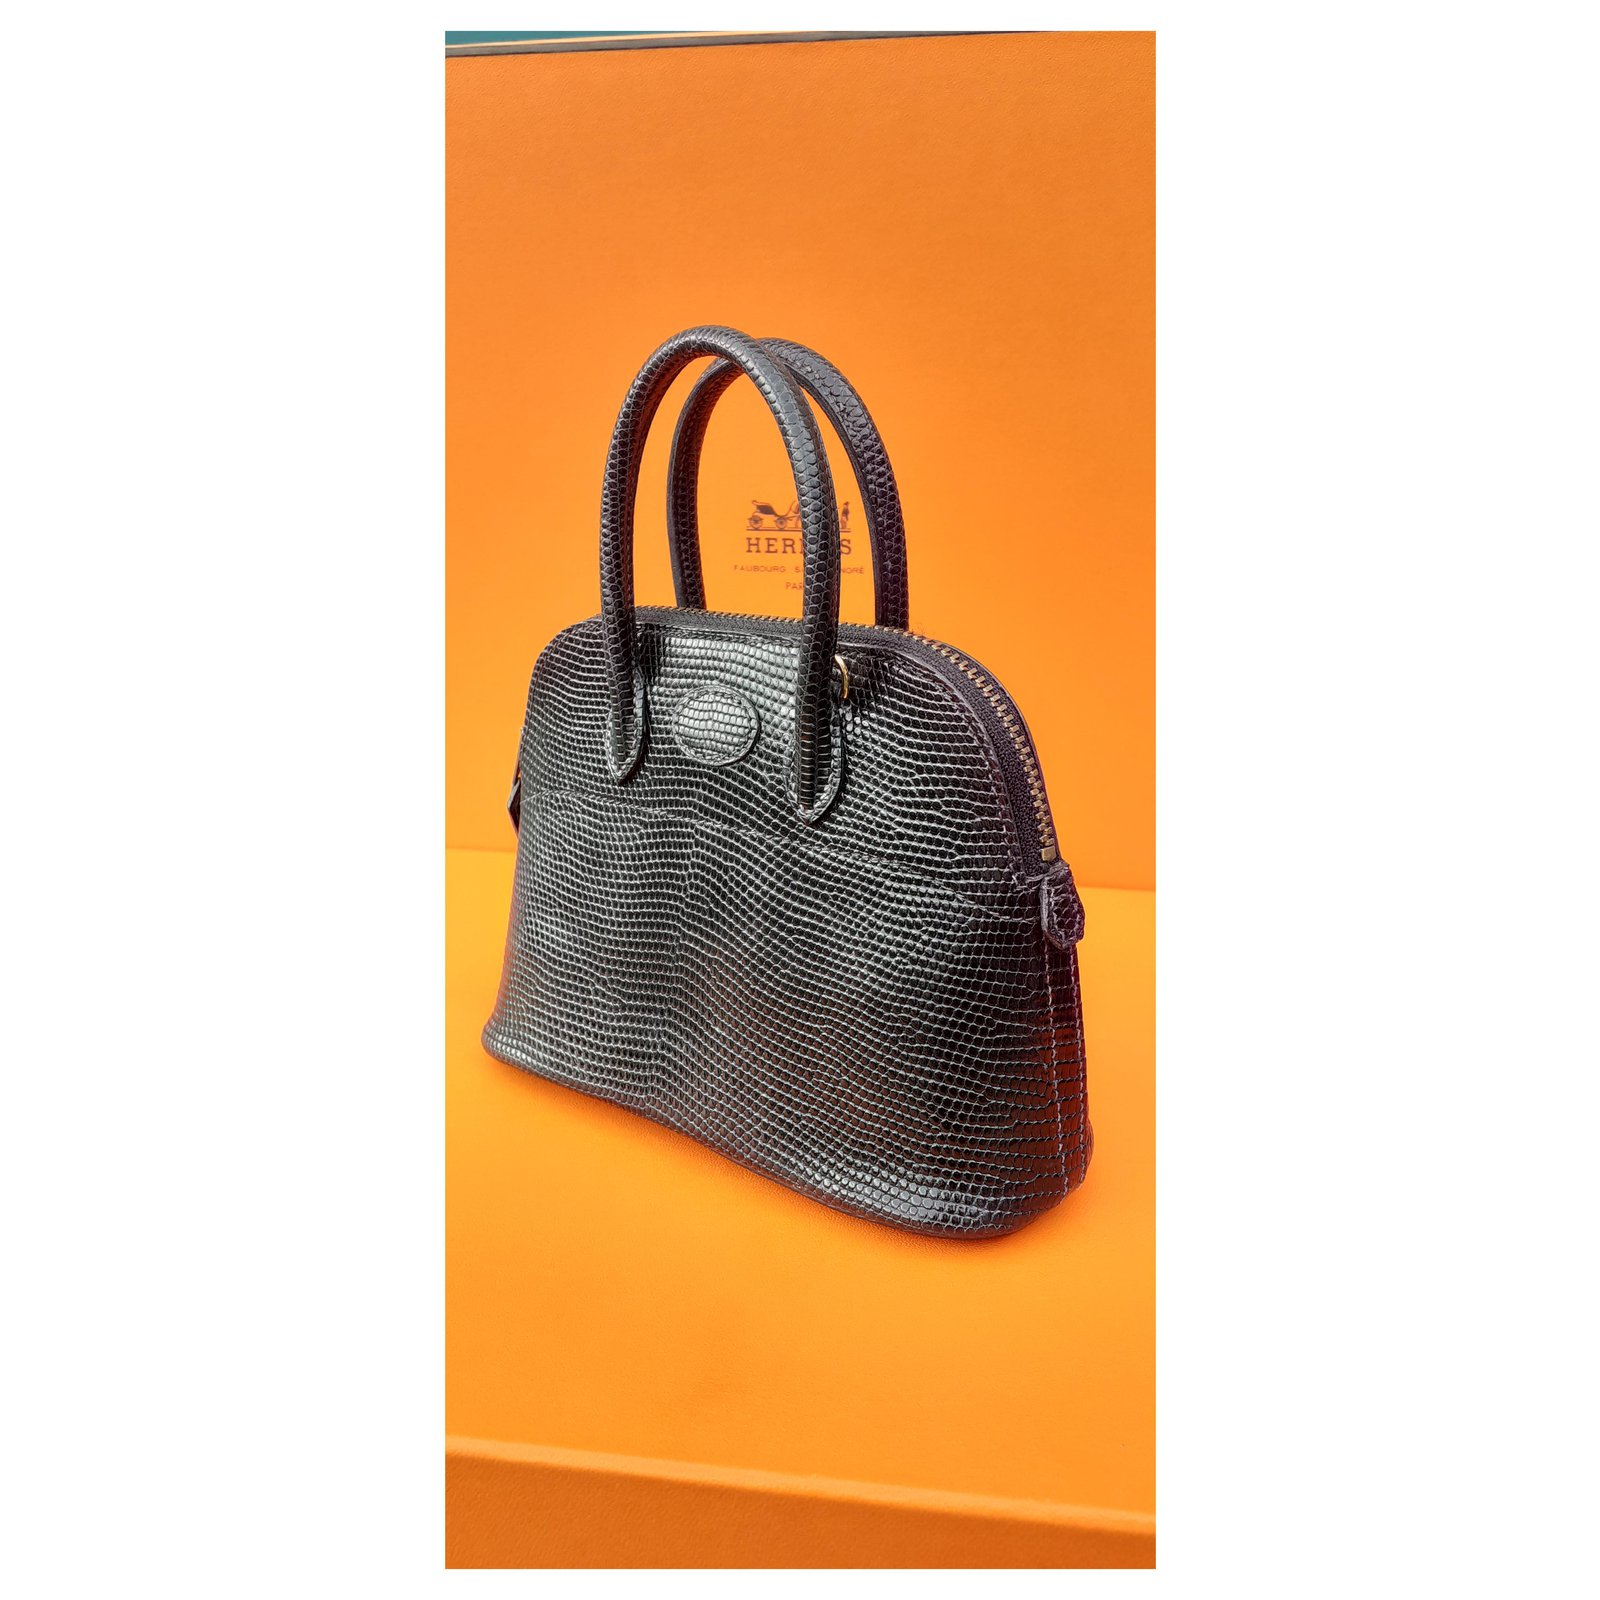 Exceptional Hermès Micro Bolide Bag Black Lizard Golden Hdw 16 cm